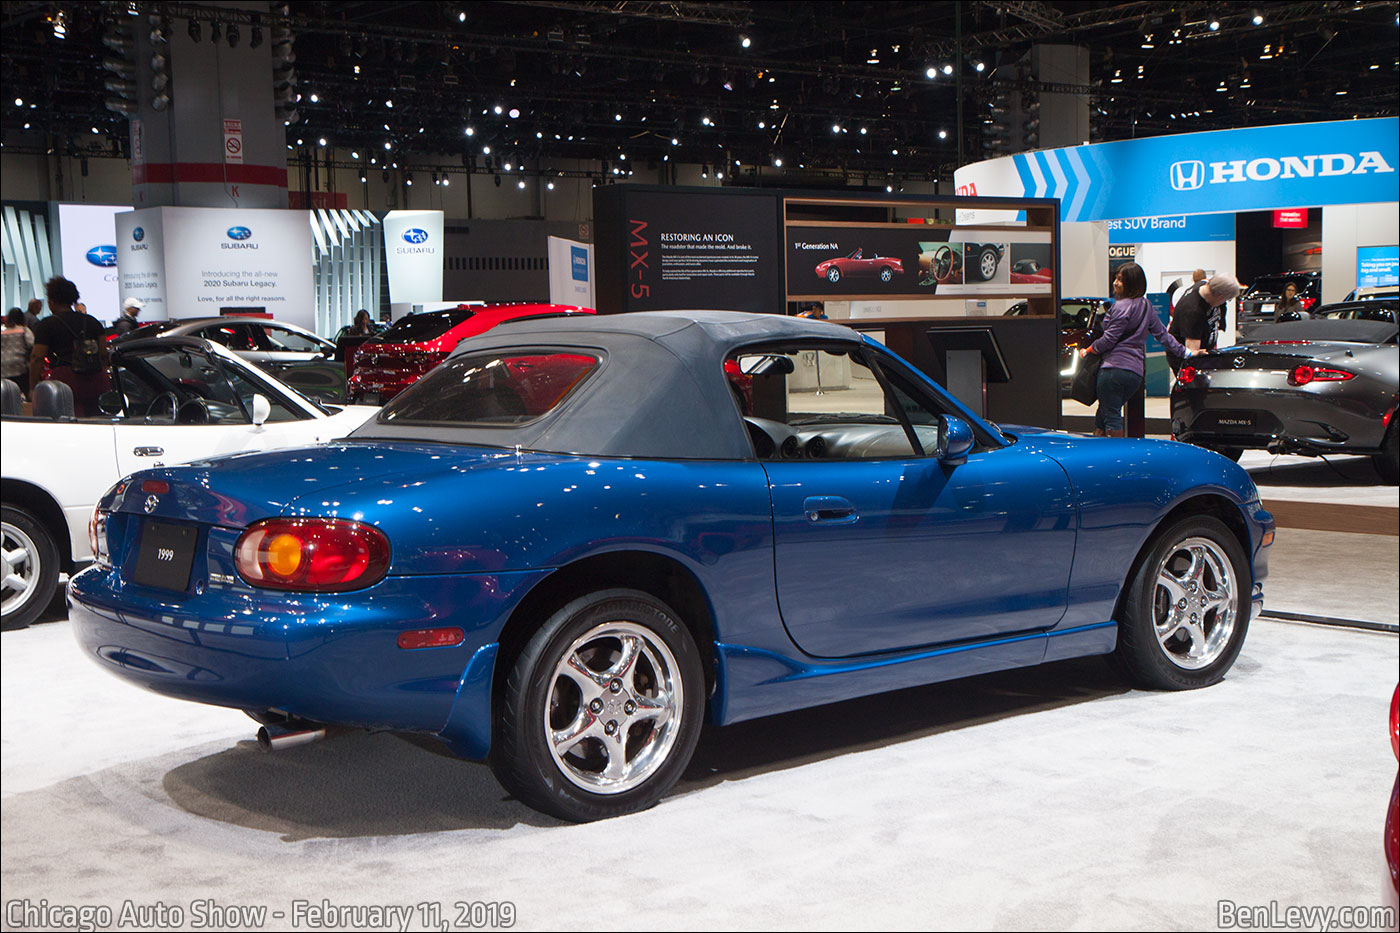 Blue 1999 Mazda Miata